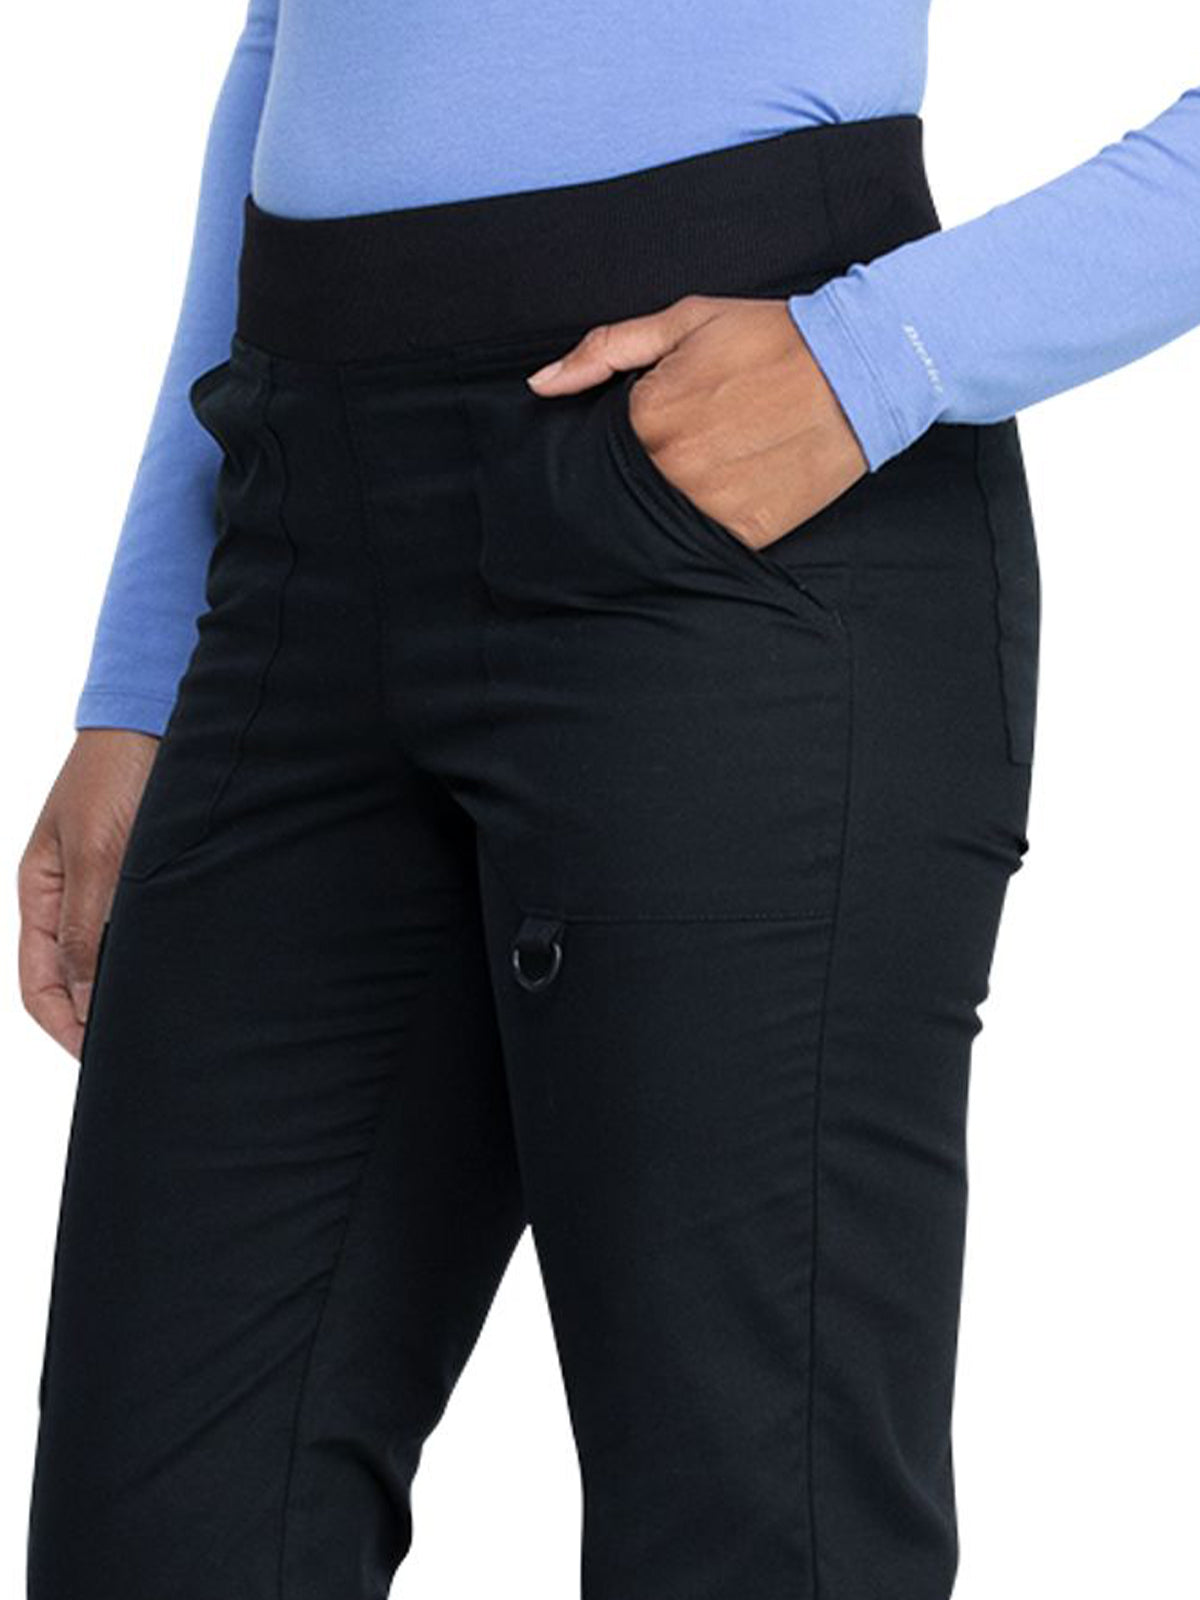 Women's Mid Rise Tapered Leg Pull-on Pant - DK125 - Black